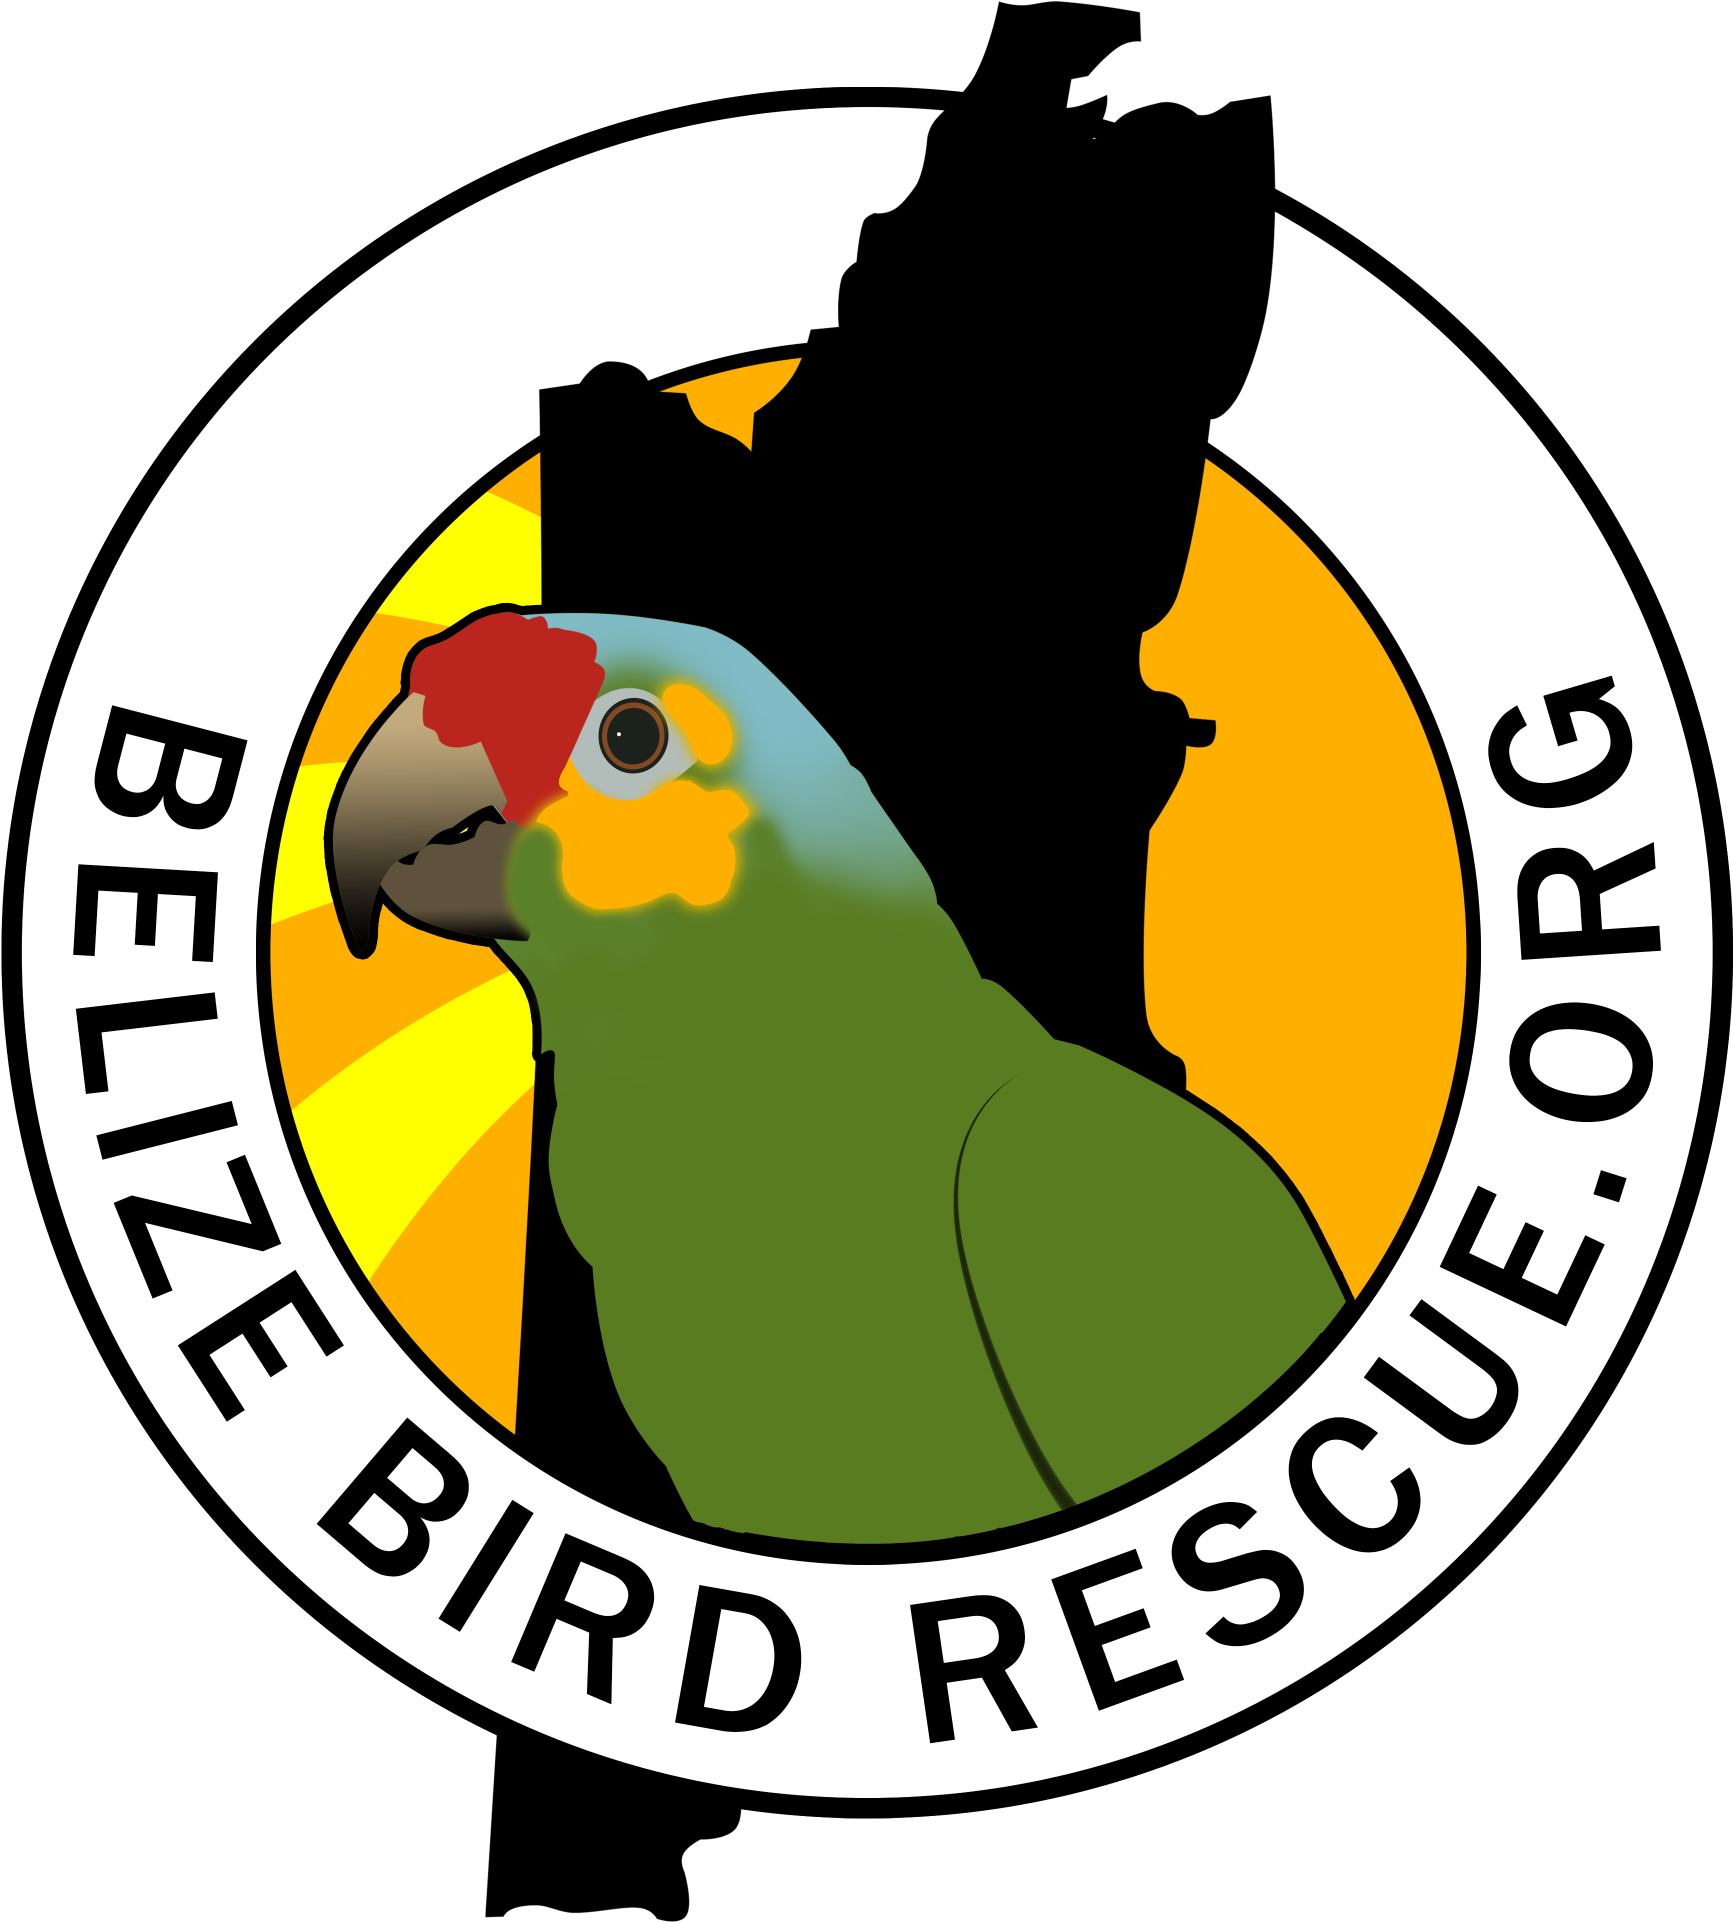 Belize Bird Rescue - Belize Bird Rescue (2000x1996)